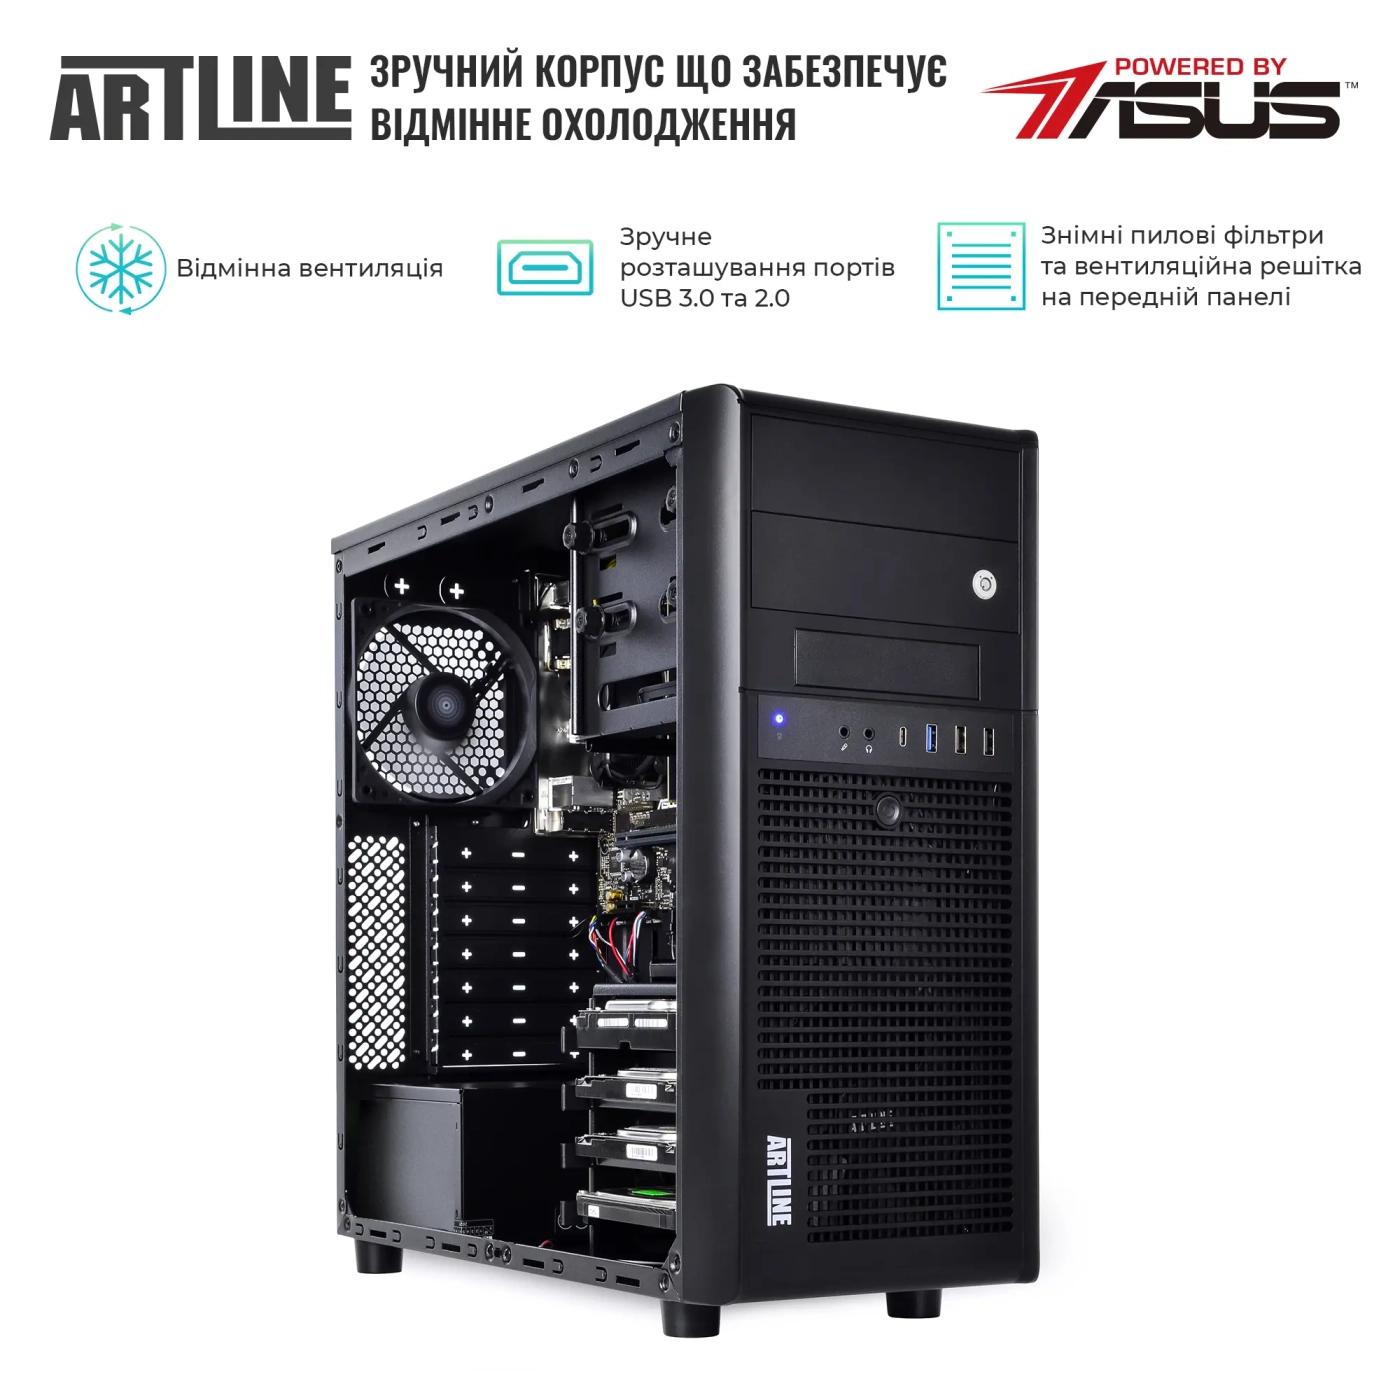 Купити Сервер ARTLINE Business T37v28 - фото 3